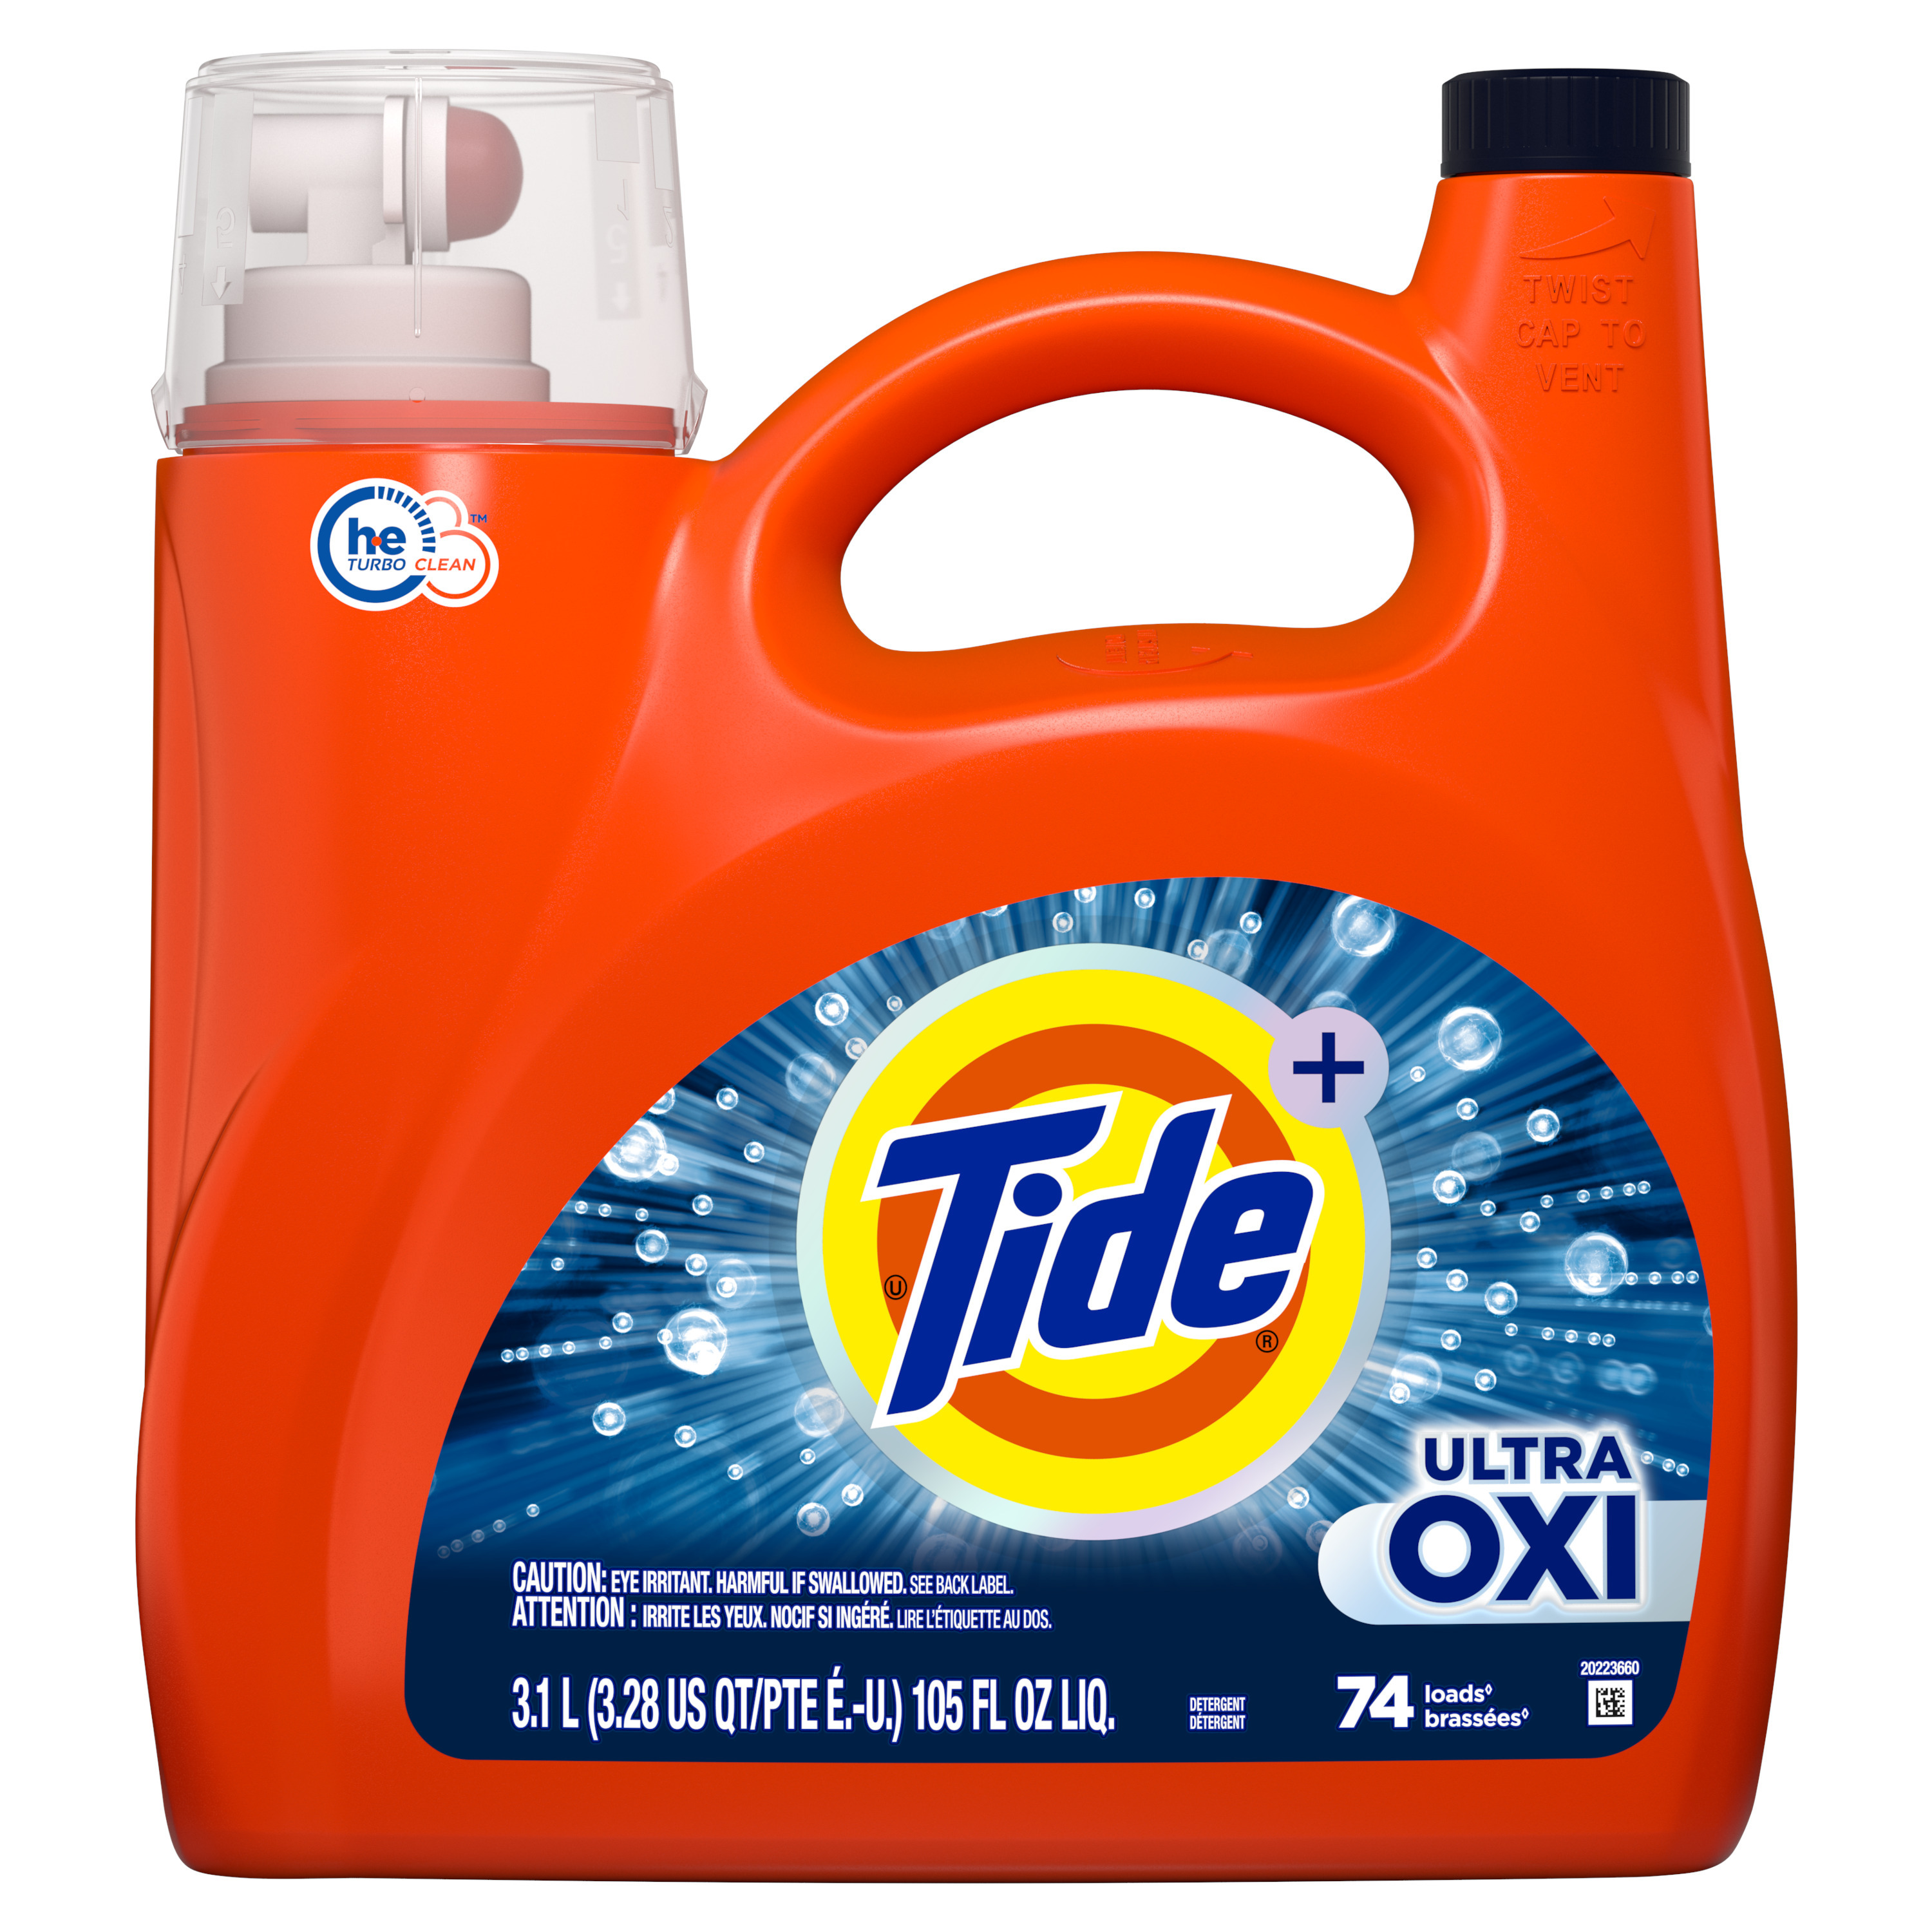 Tide Ultra Oxi Liquid Laundry Detergent, HE Compatible, 74 Loads, 105 fl oz